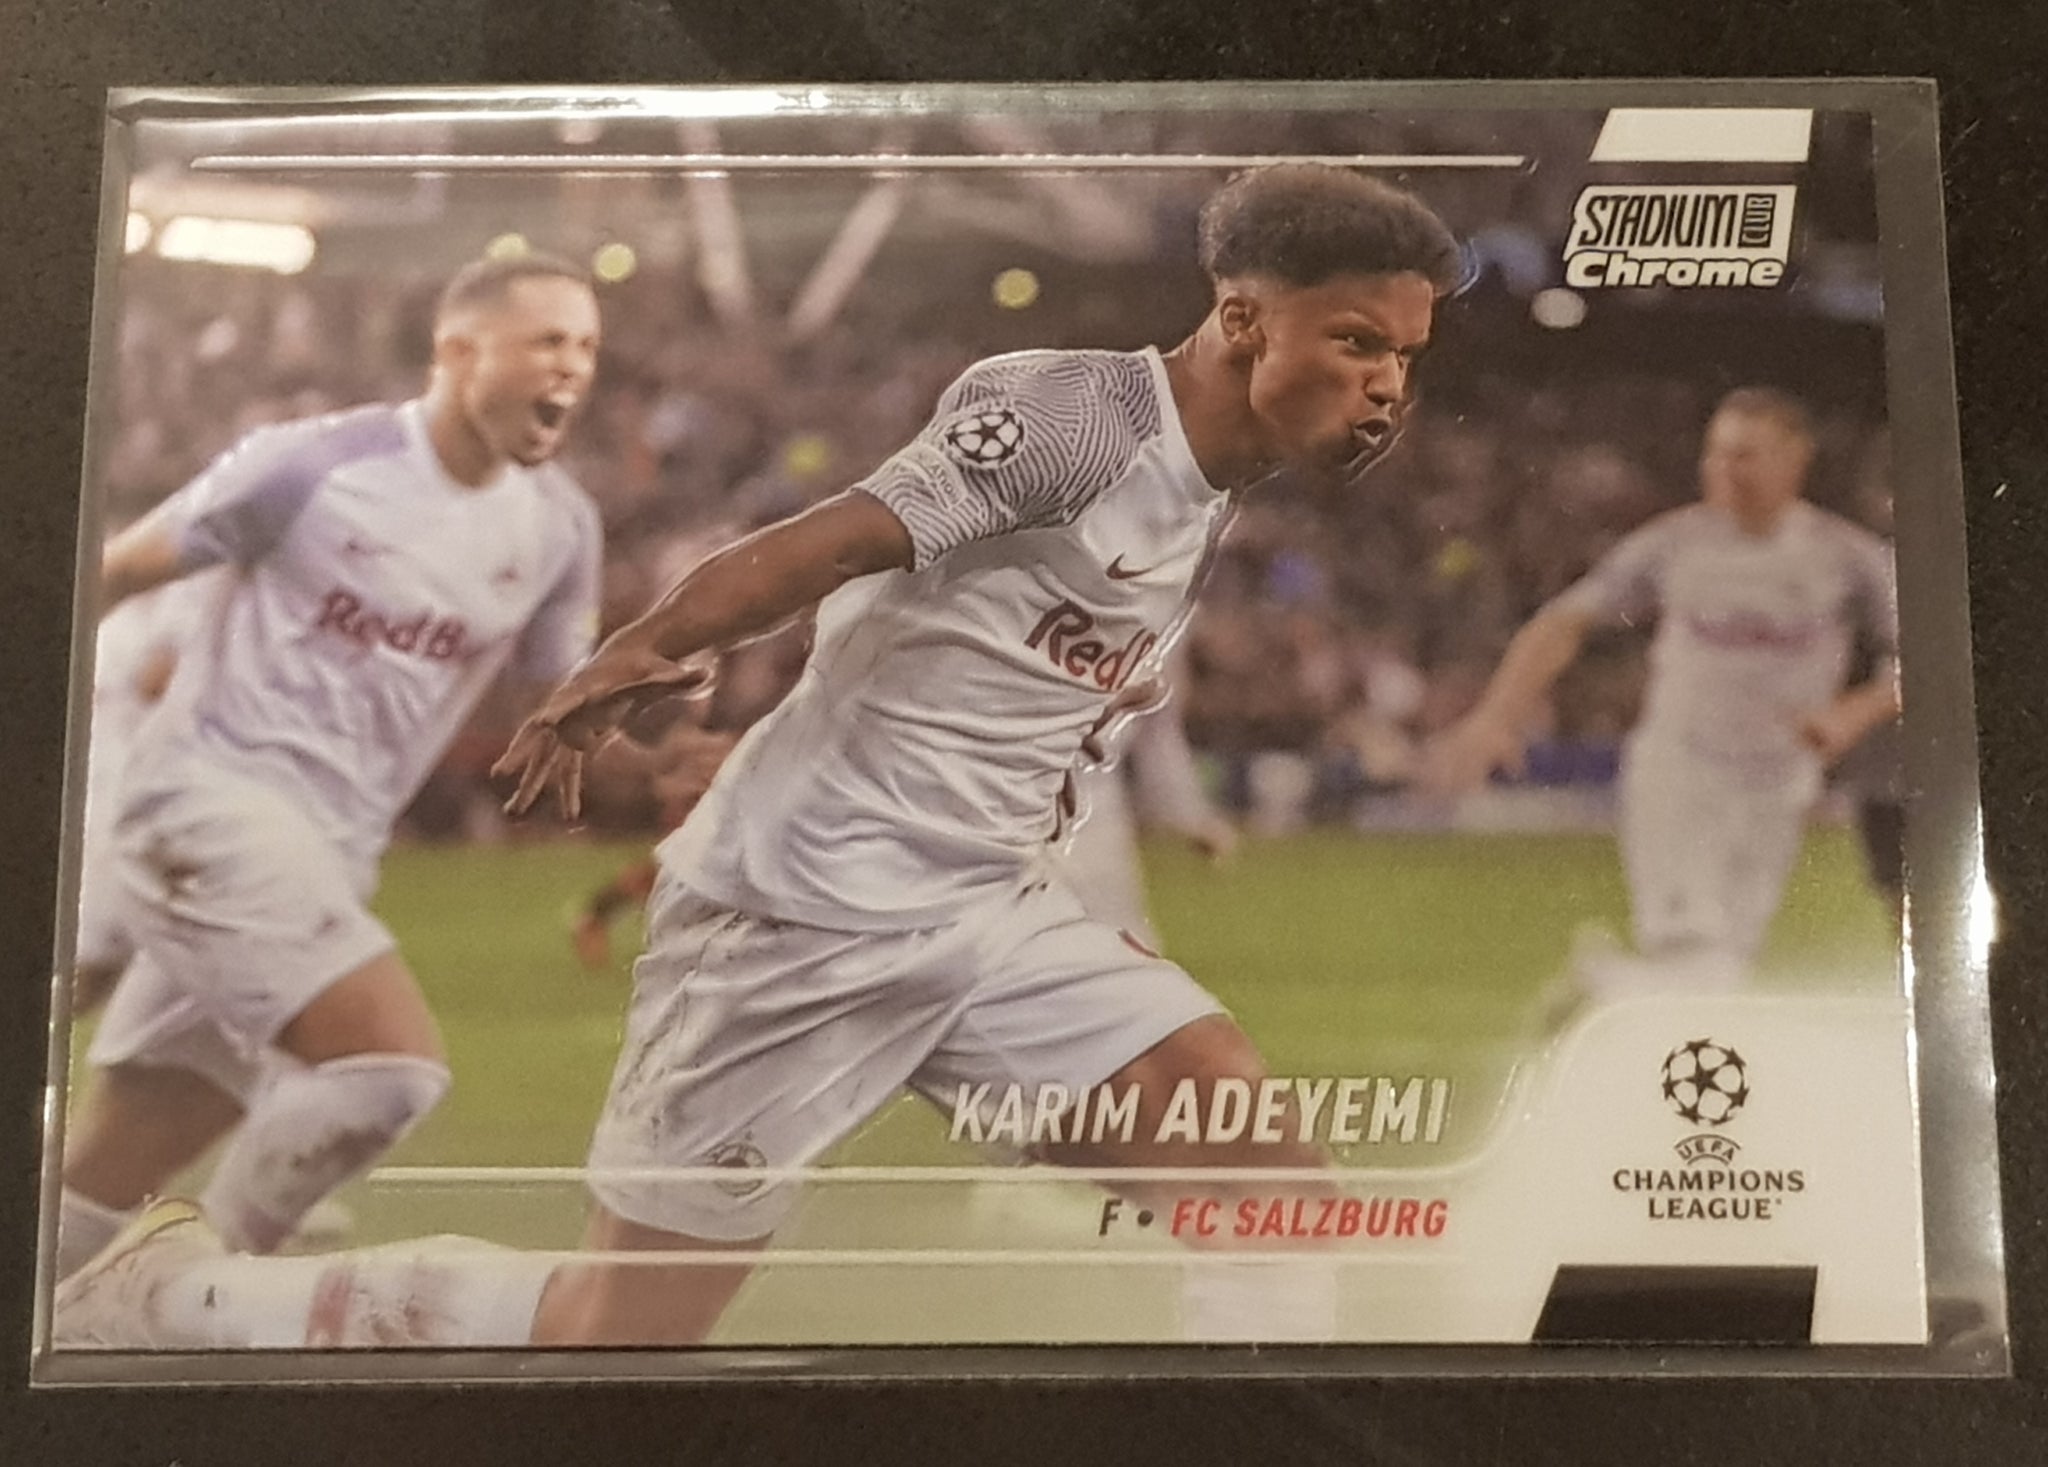 2021-22 Topps Stadium Club Chrome Champions League Karim Adeyemi #81 Trading Card